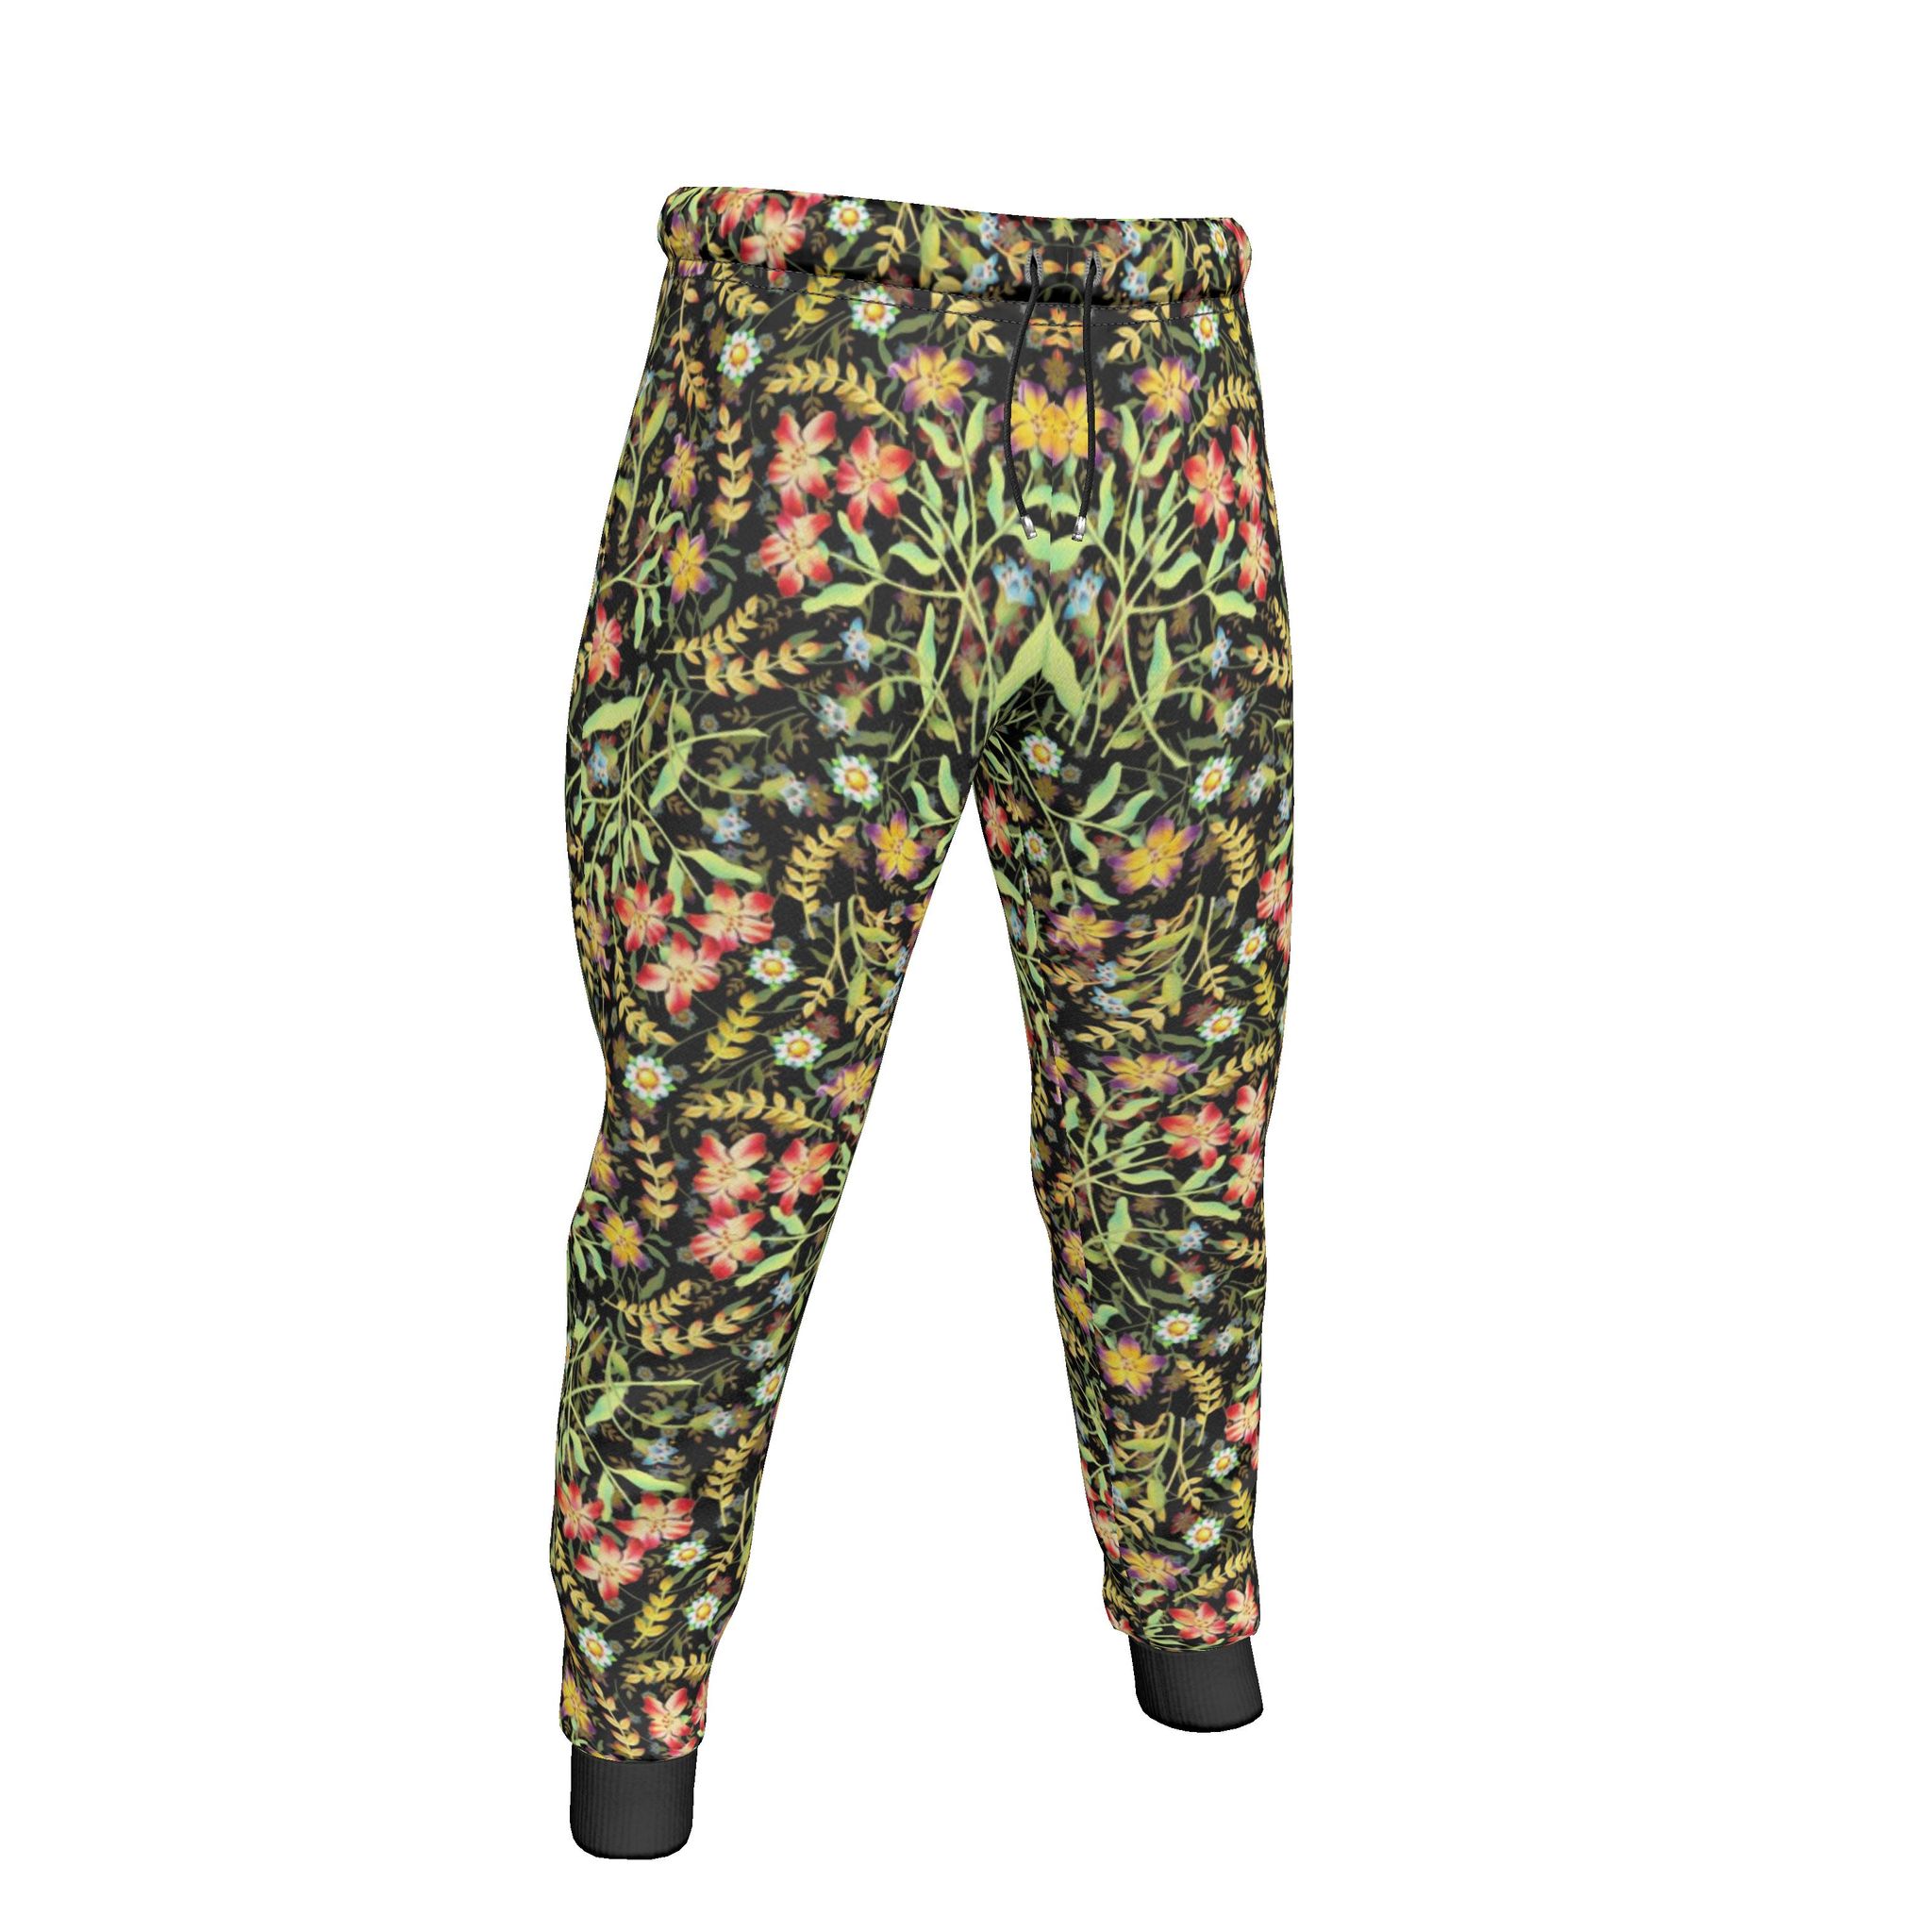 Buy Mens Abstract Floral Print Bohemian Hippy Harem Pants For Yoga   Enimane